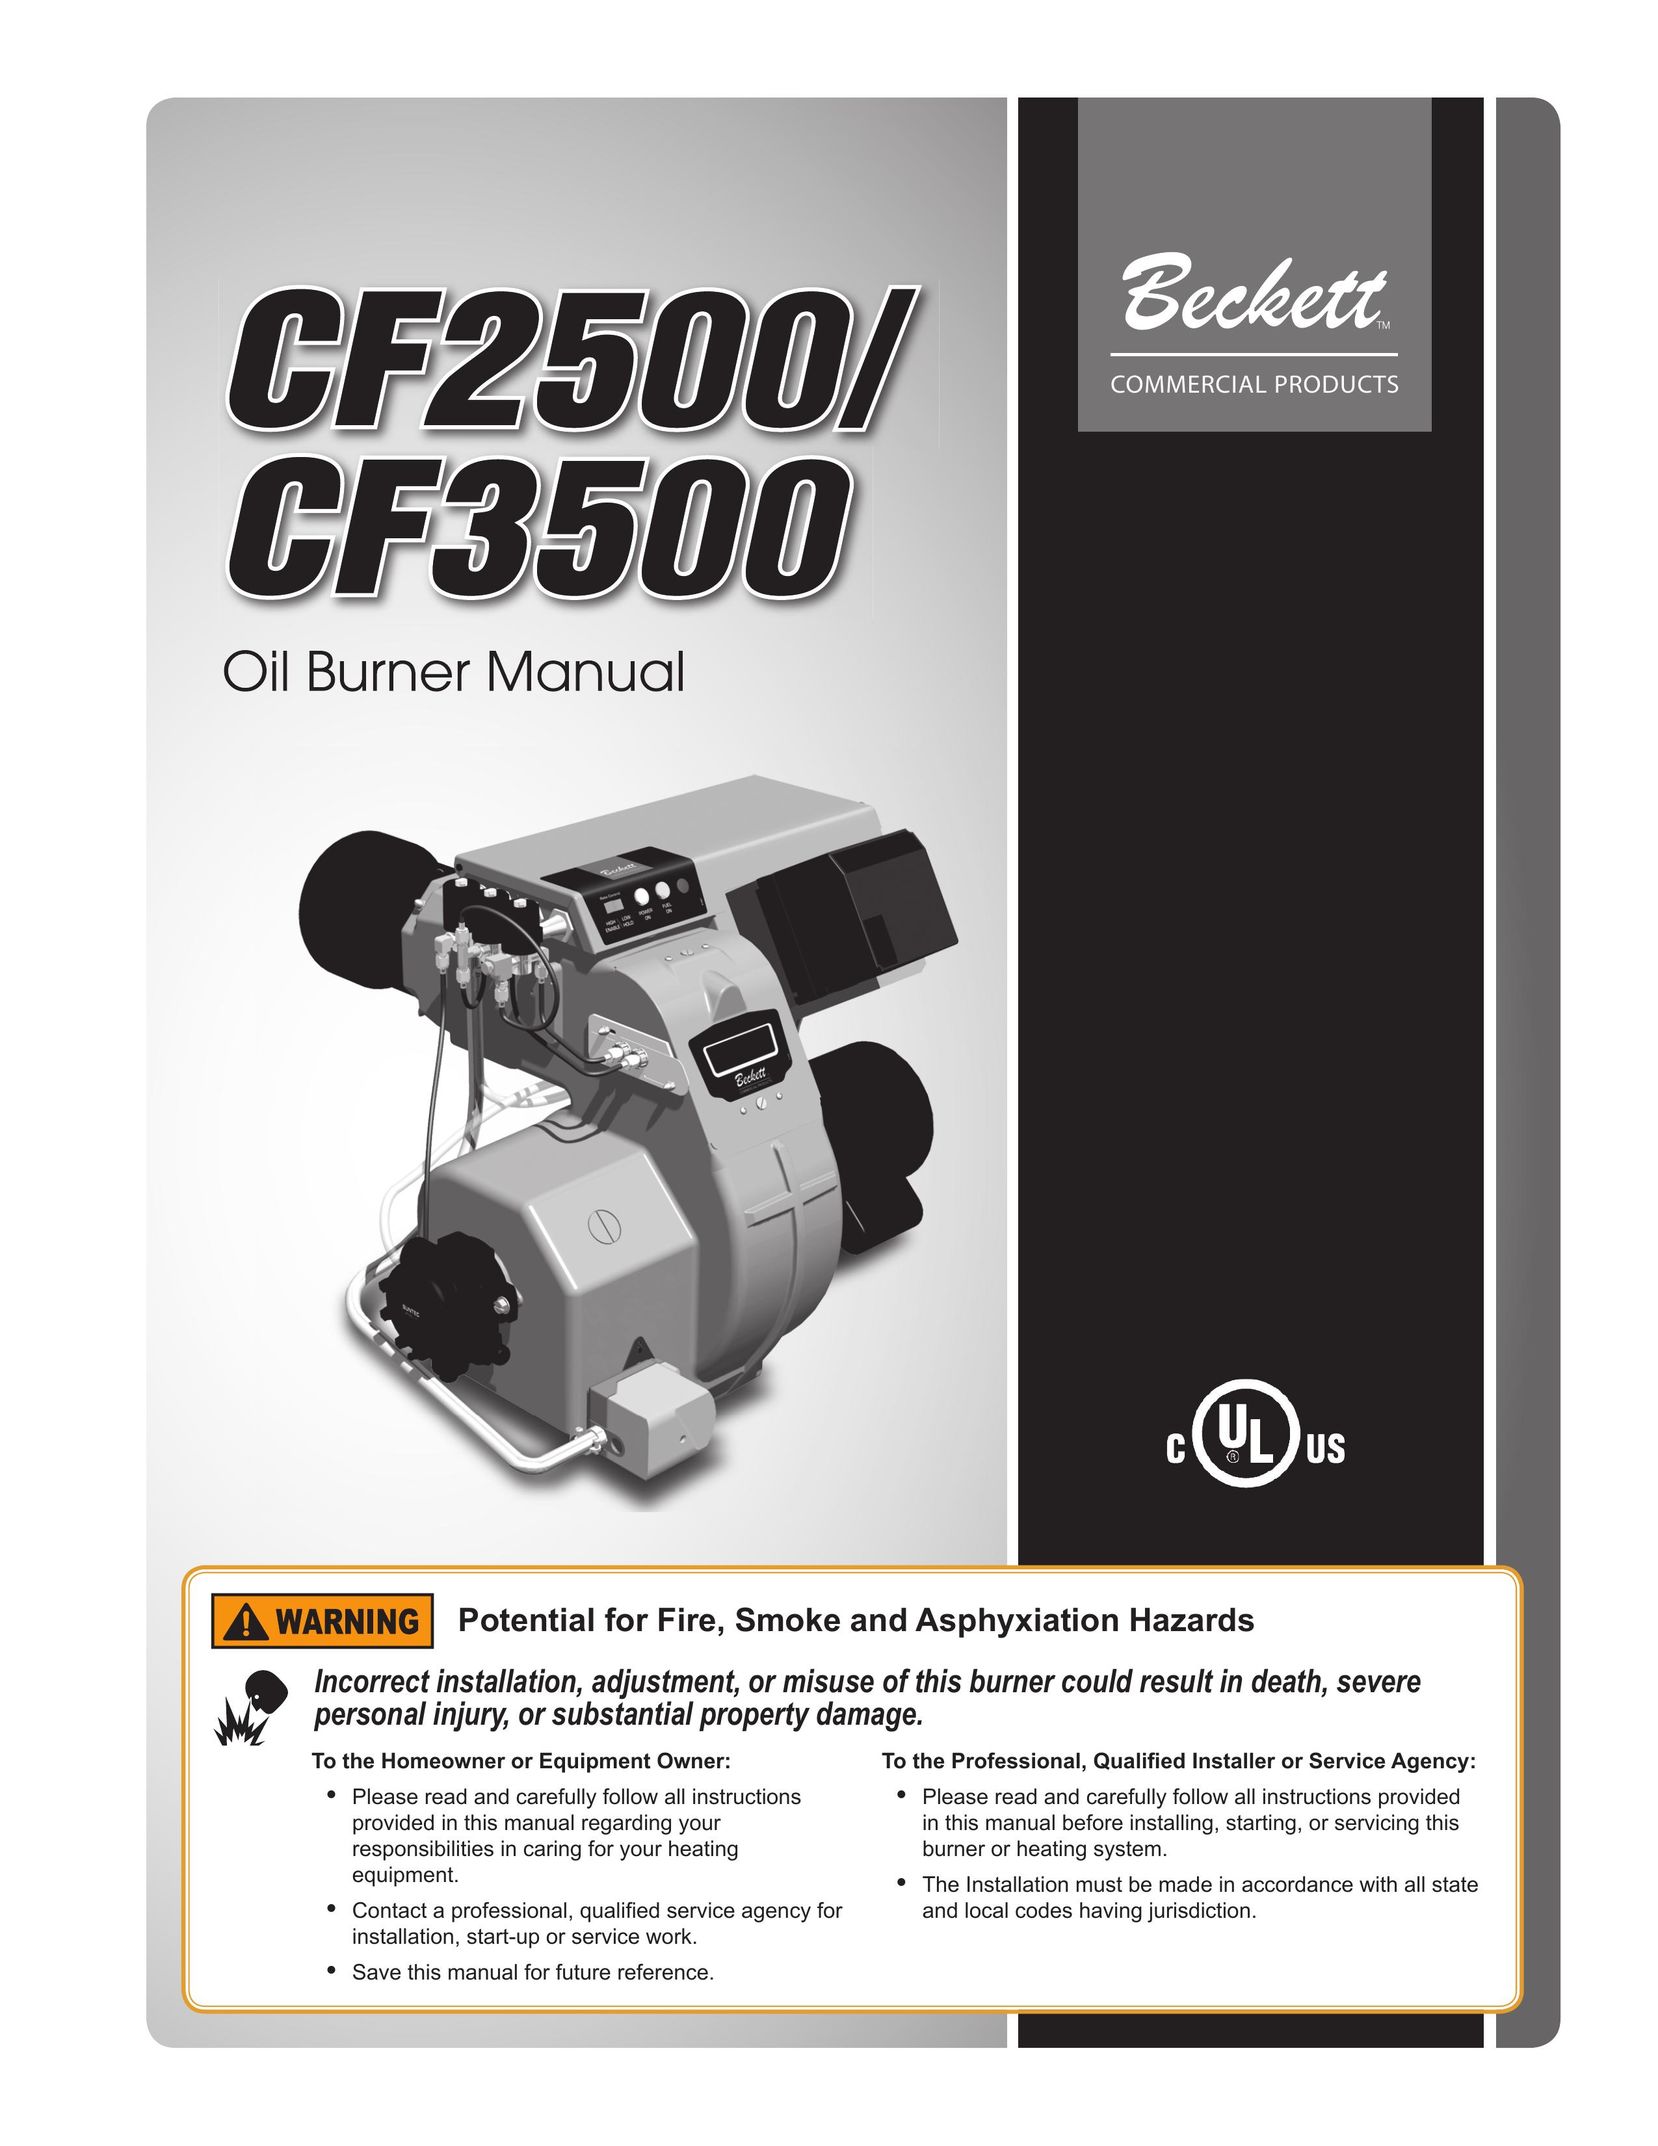 Beckett CF3500 Burner User Manual